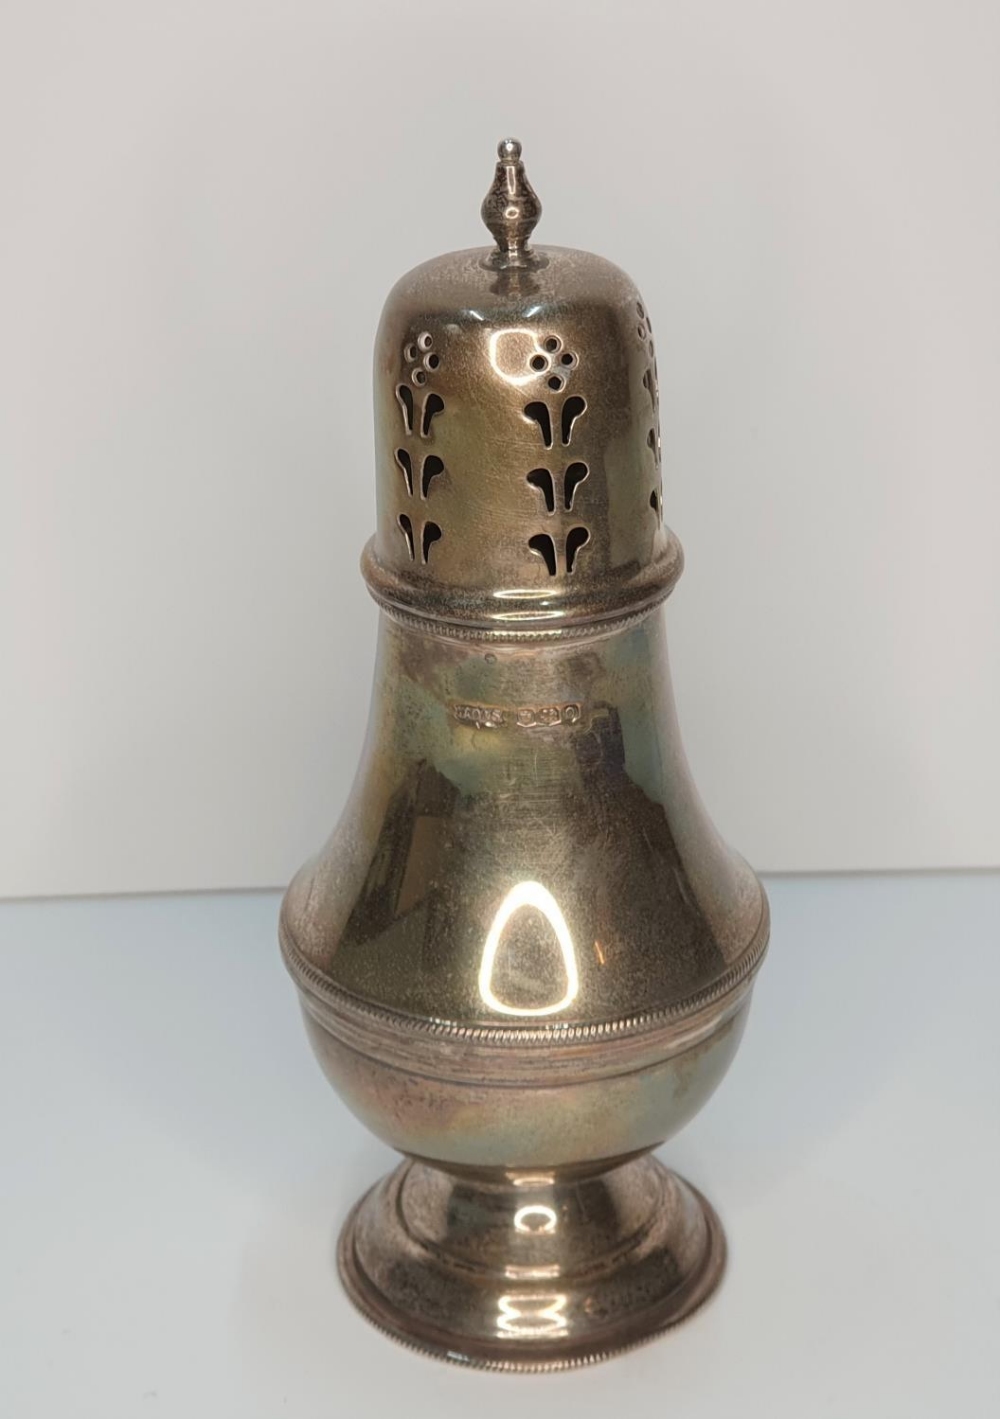 Antique silver sugar shaker, 15 cm high